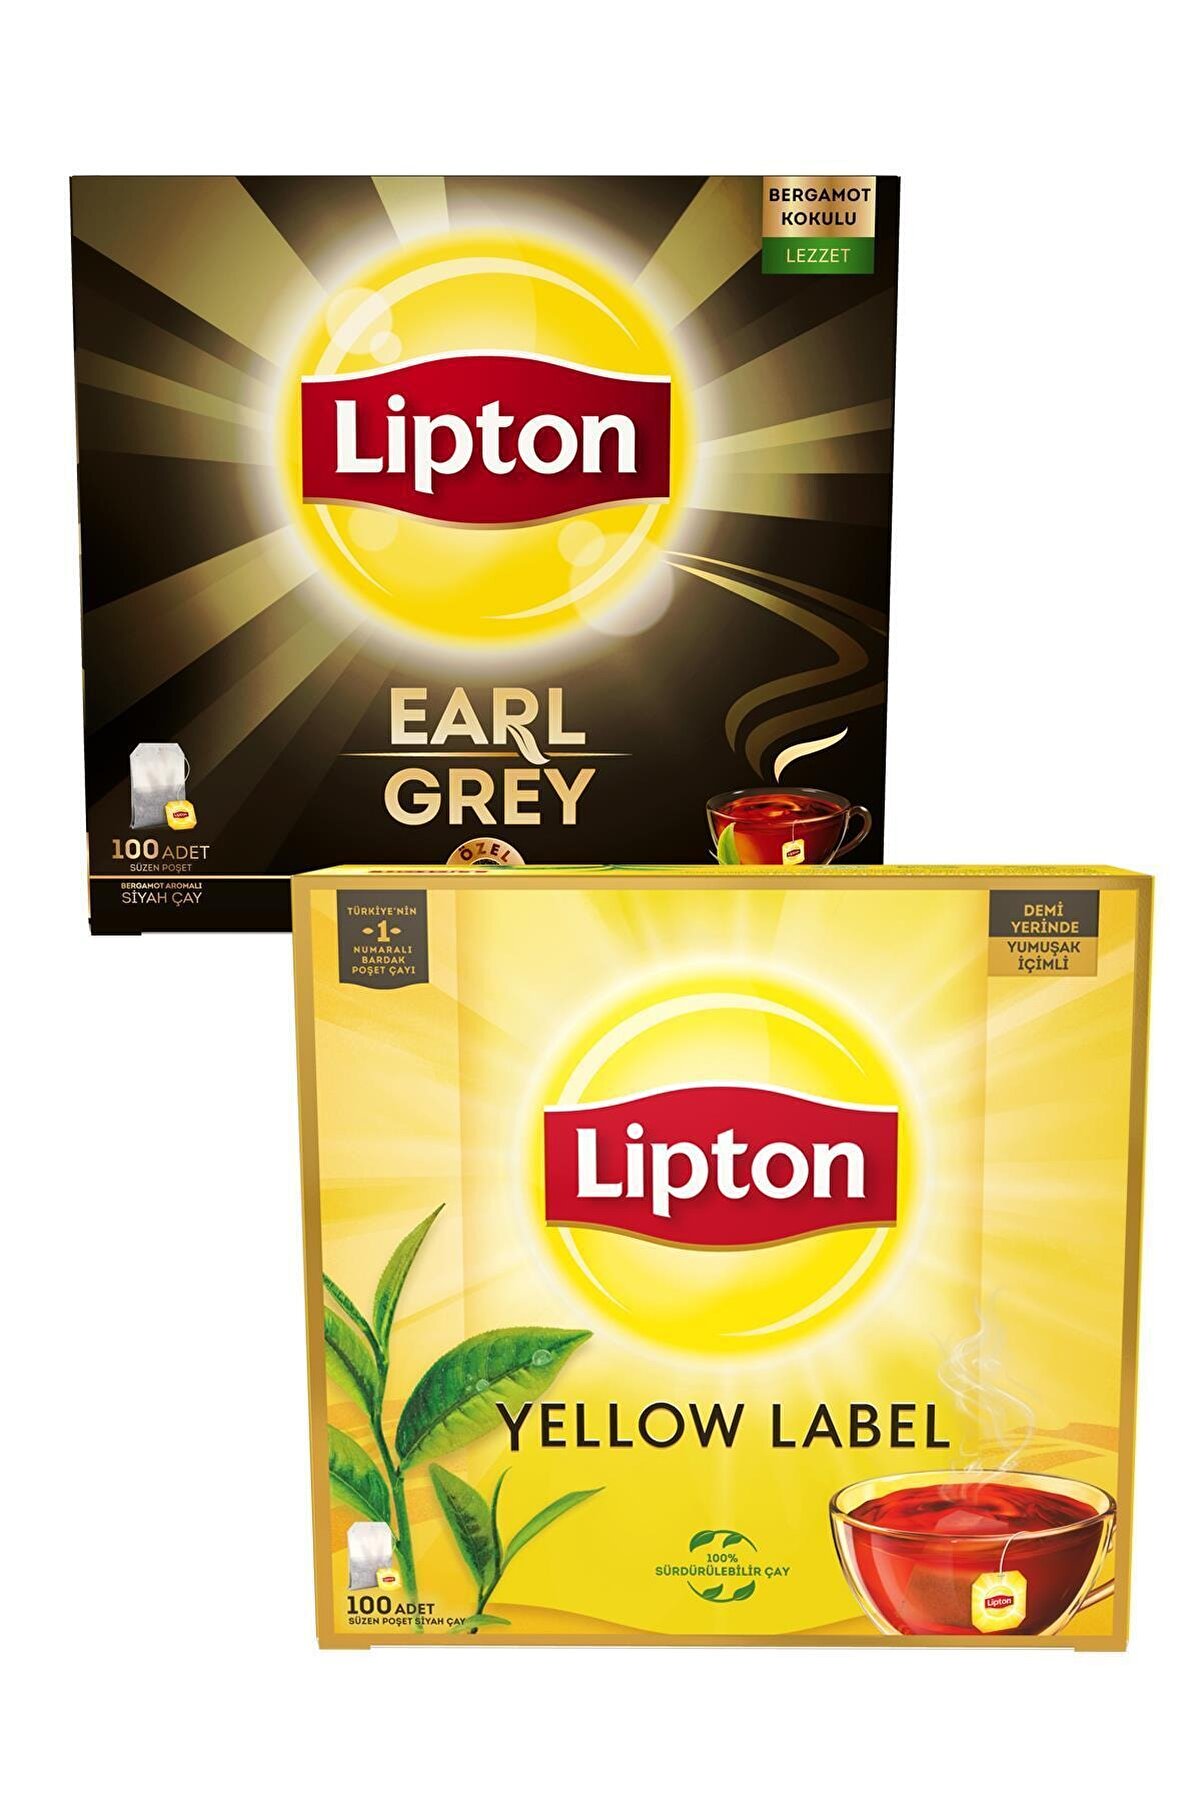 Lipton Bardak Poşet Çay Yellow Label Bardak Poşet Çay 100'lü & Lipton Earl Grey 100'lü